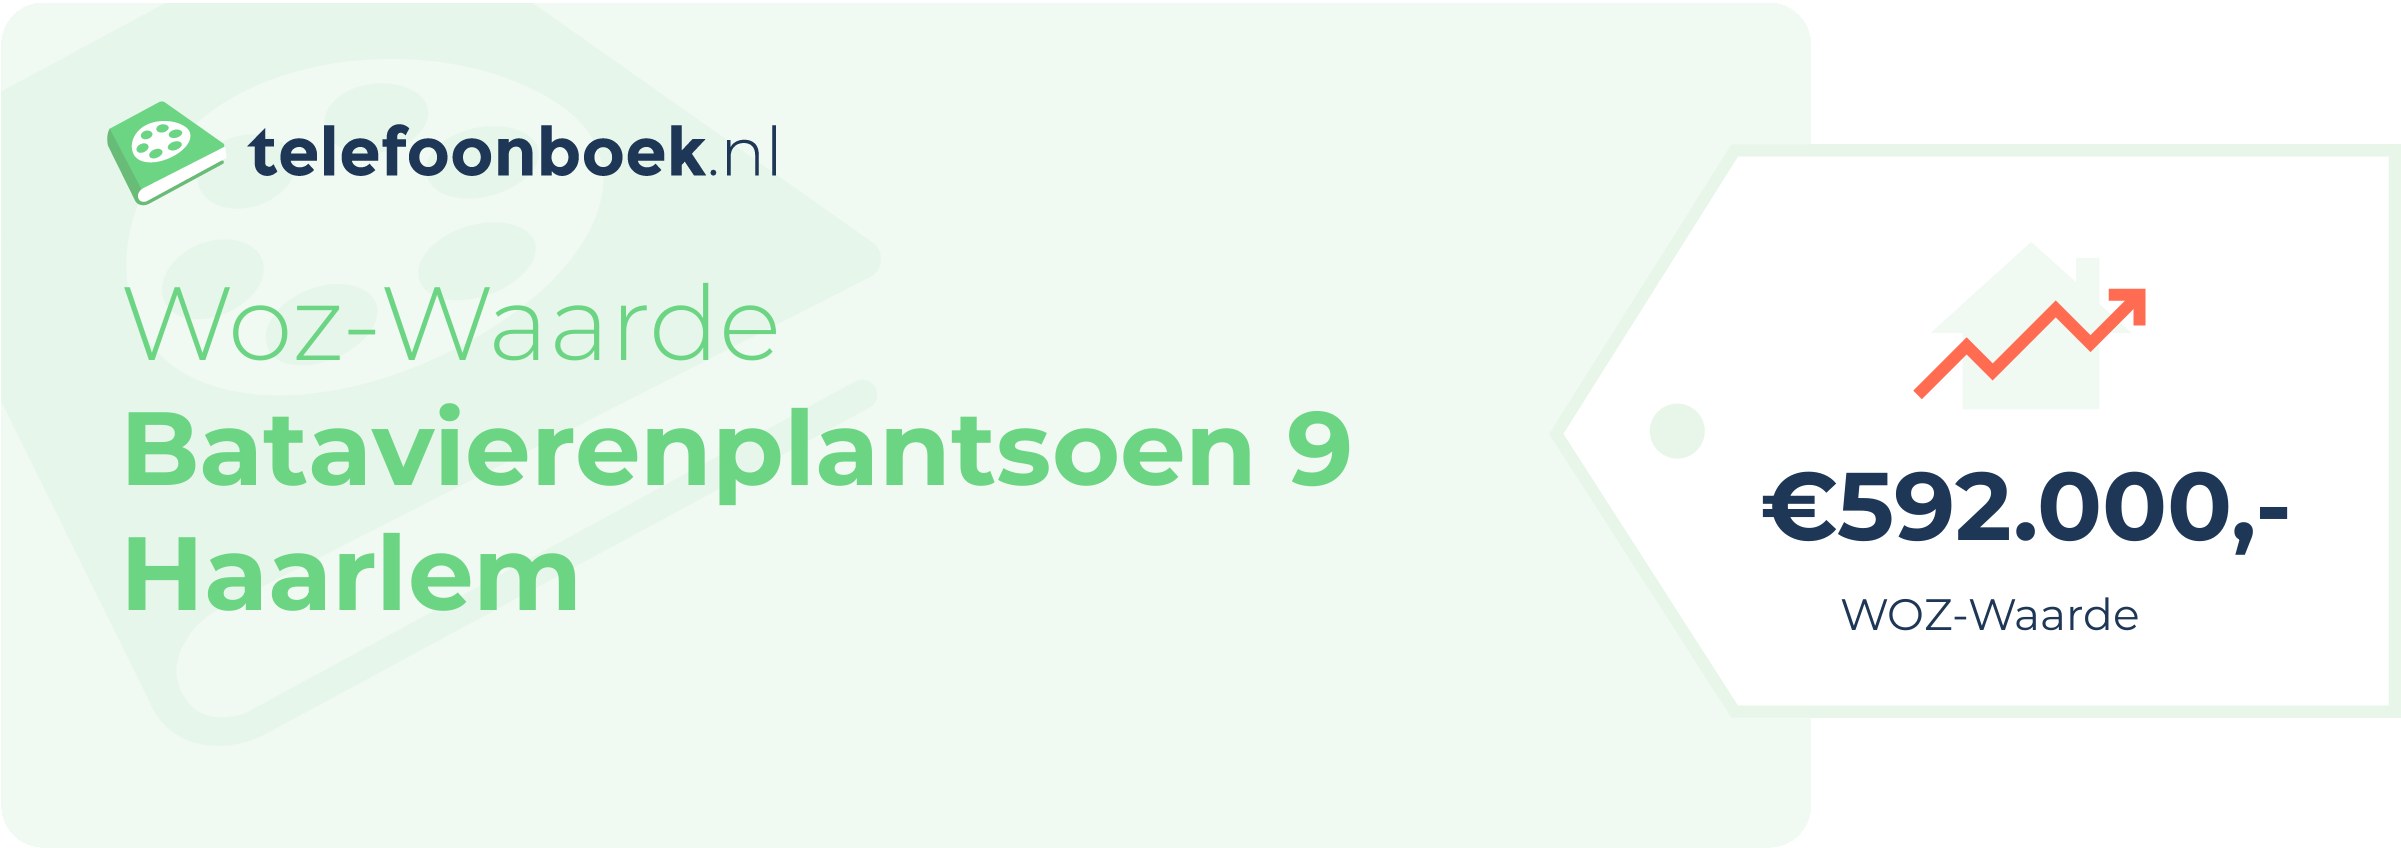 WOZ-waarde Batavierenplantsoen 9 Haarlem